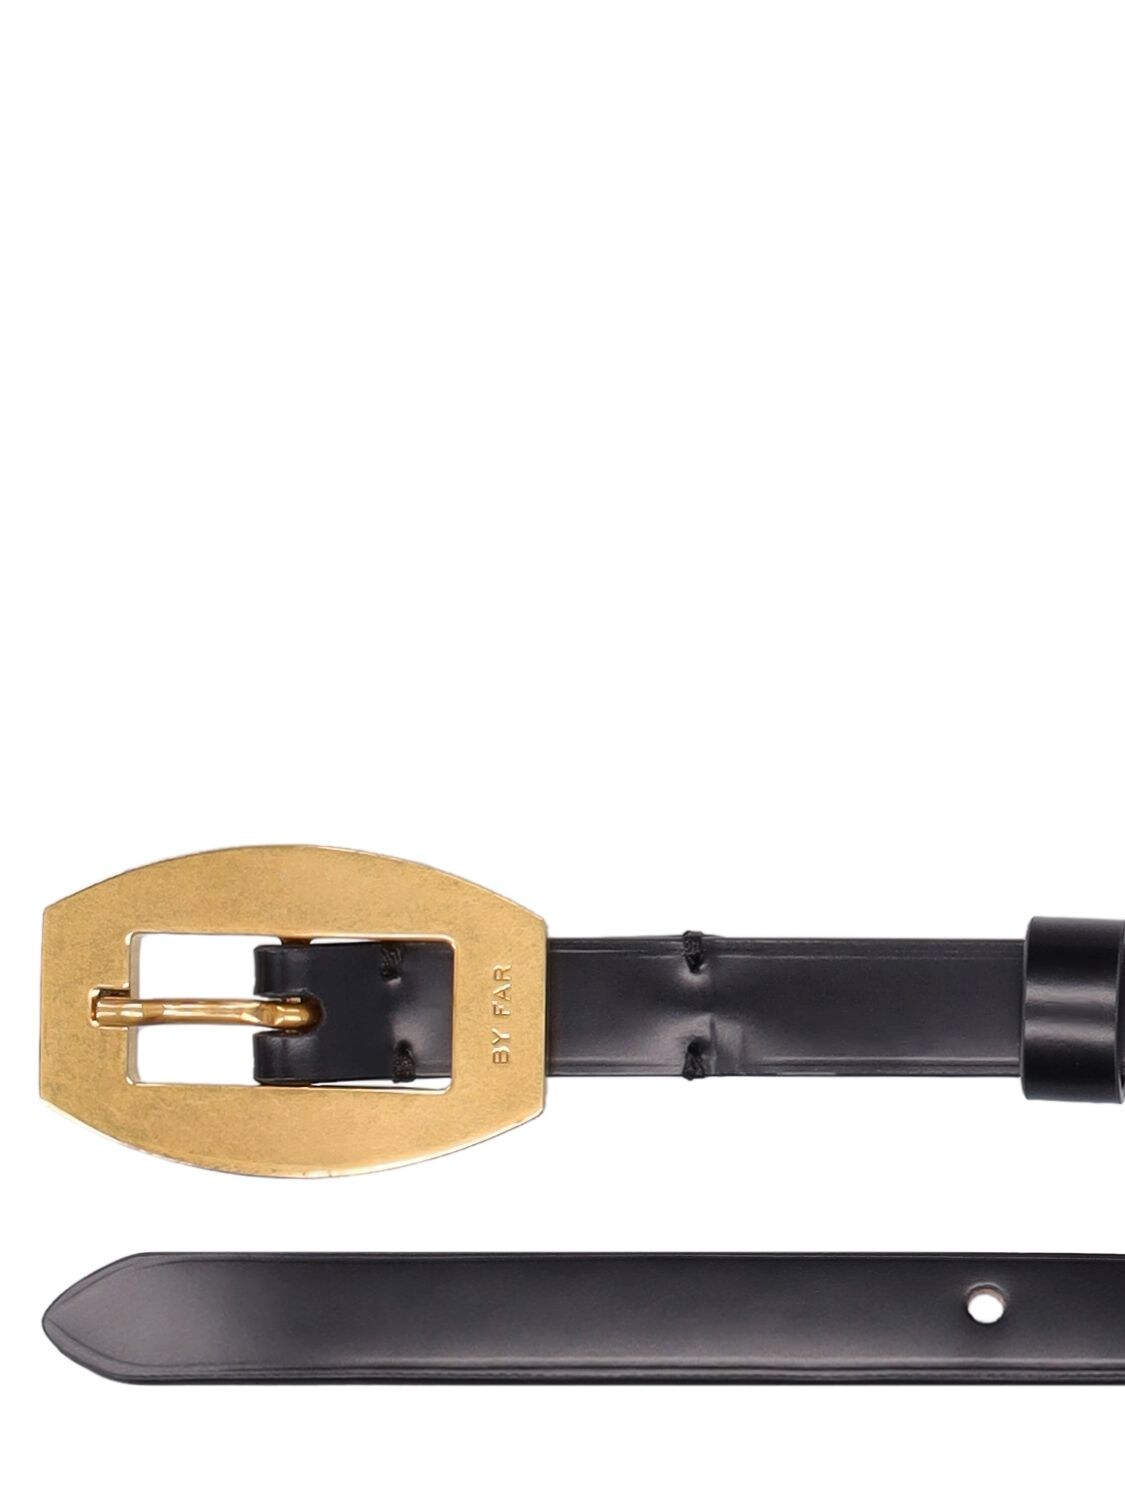 B28 - Black Patent Leather Belt